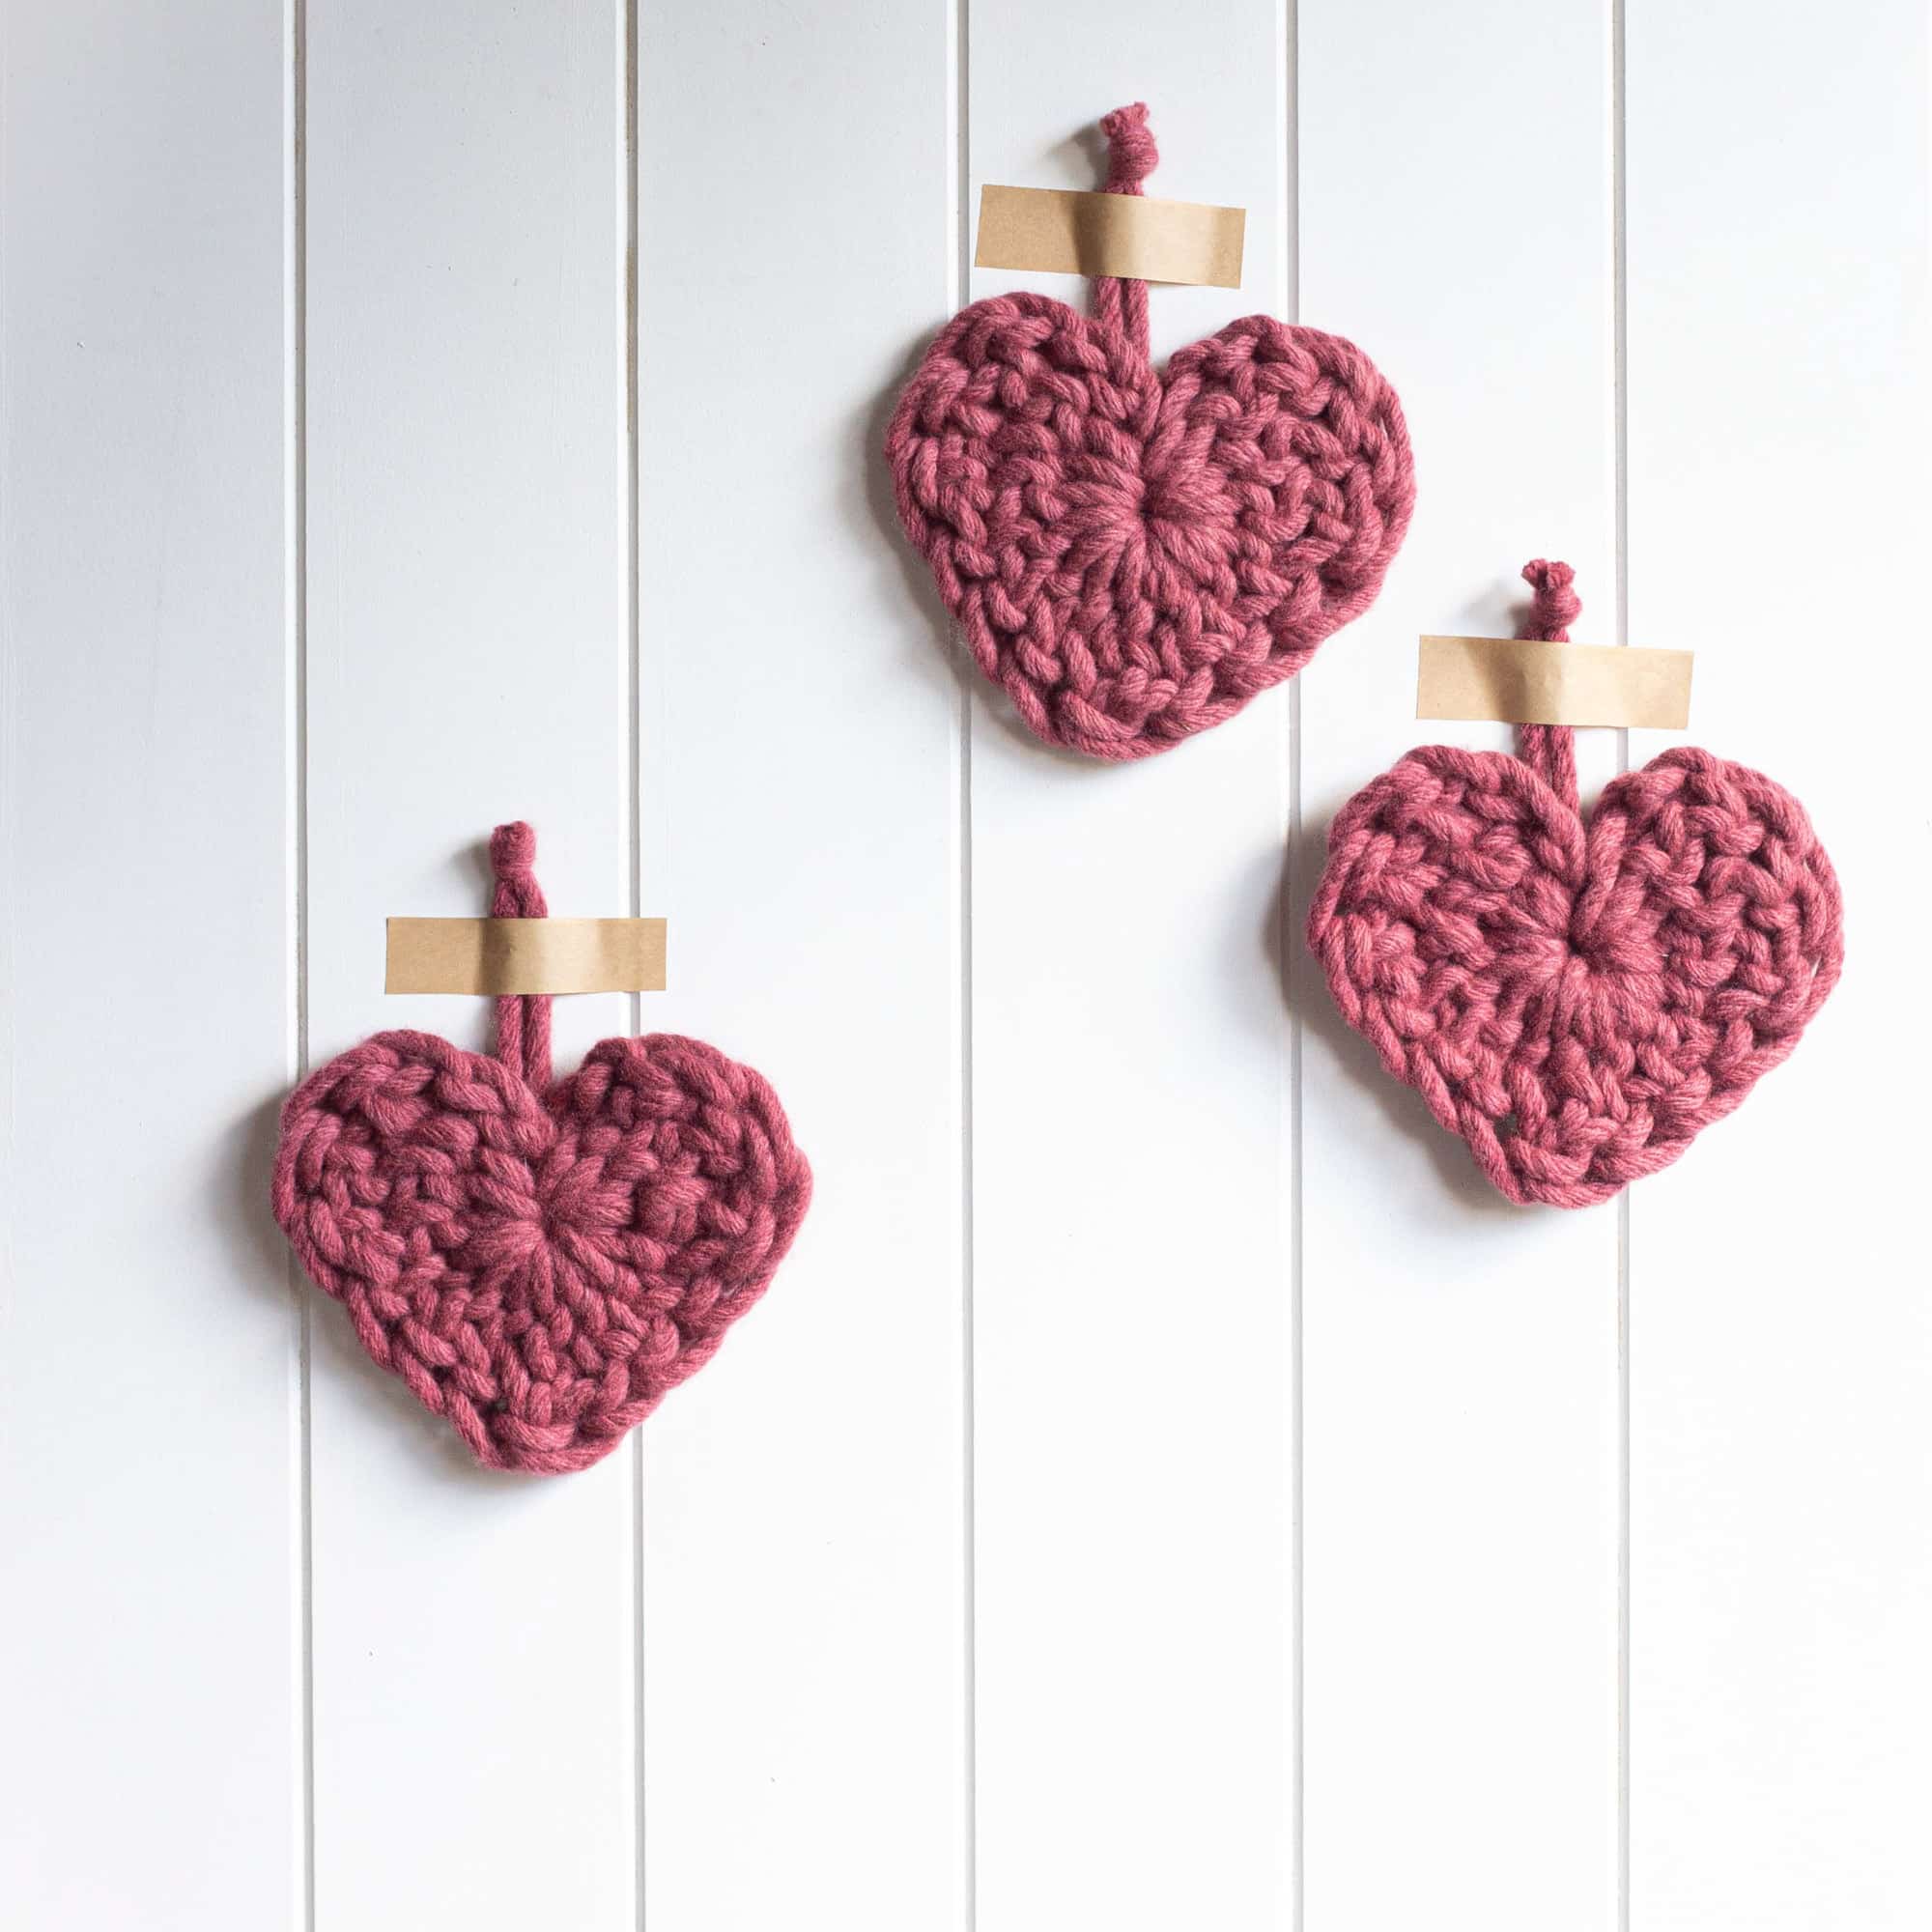 Chunky Heart Crochet Kit - rhubarb pink red - Australian merino wool | Homelea Lass Contemporary Crochet